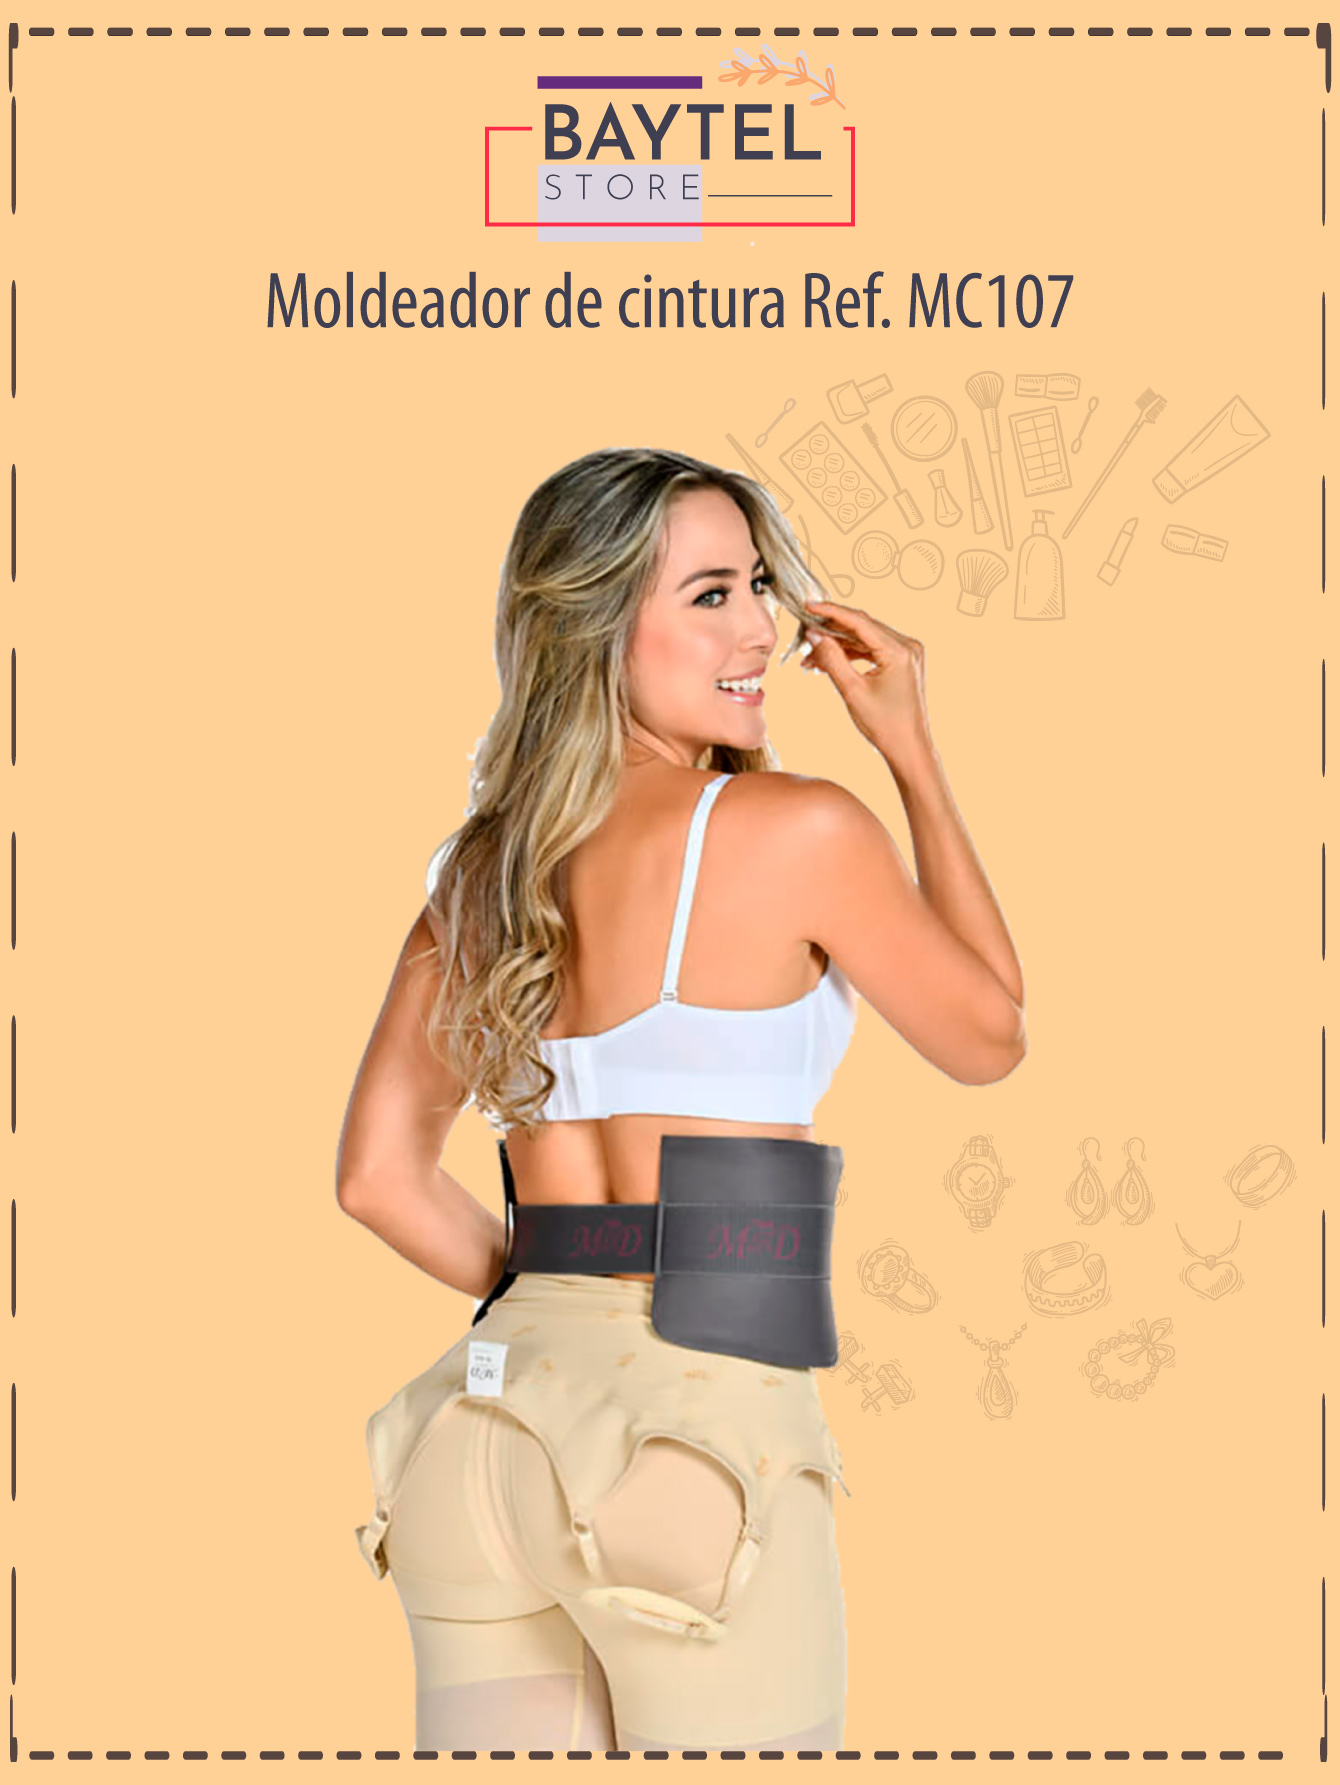 Moldeador de cintura Ref. MC107 